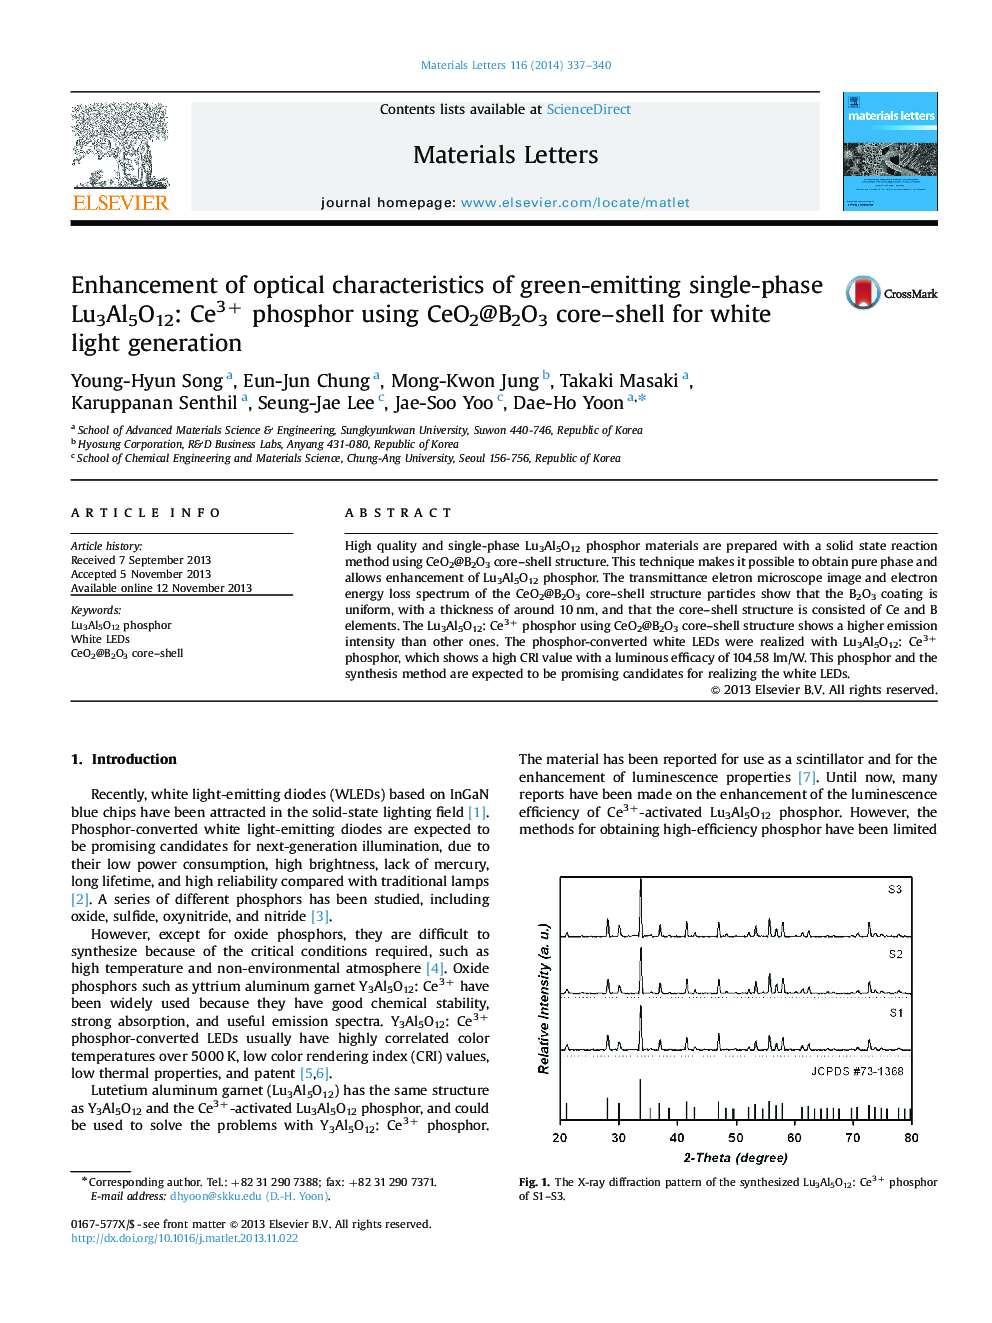 Enhancement of optical characteristics of green-emitting single-phase Lu3Al5O12: Ce3+ phosphor using CeO2@B2O3 core–shell for white light generation